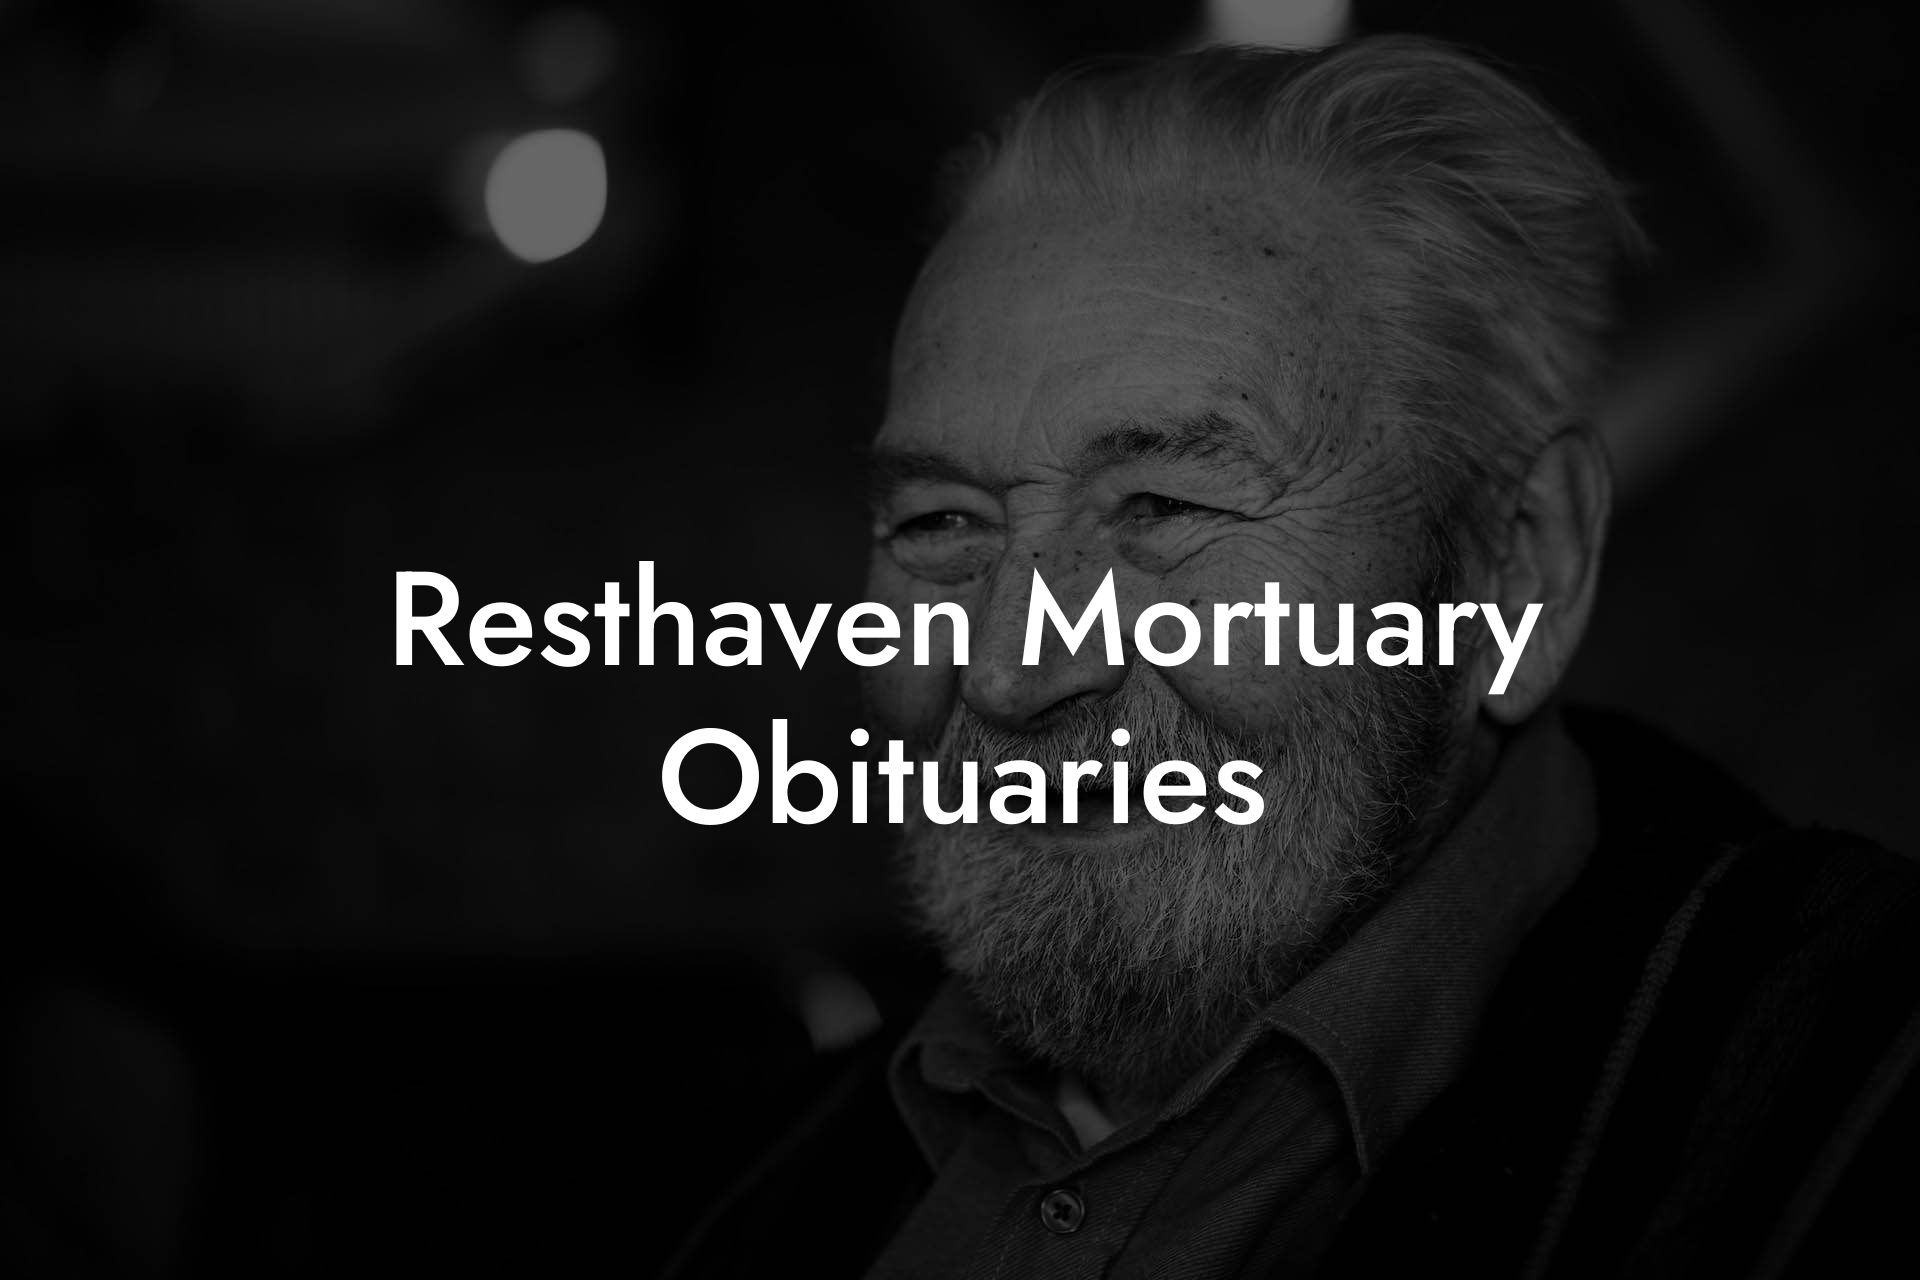 Resthaven Mortuary Obituaries